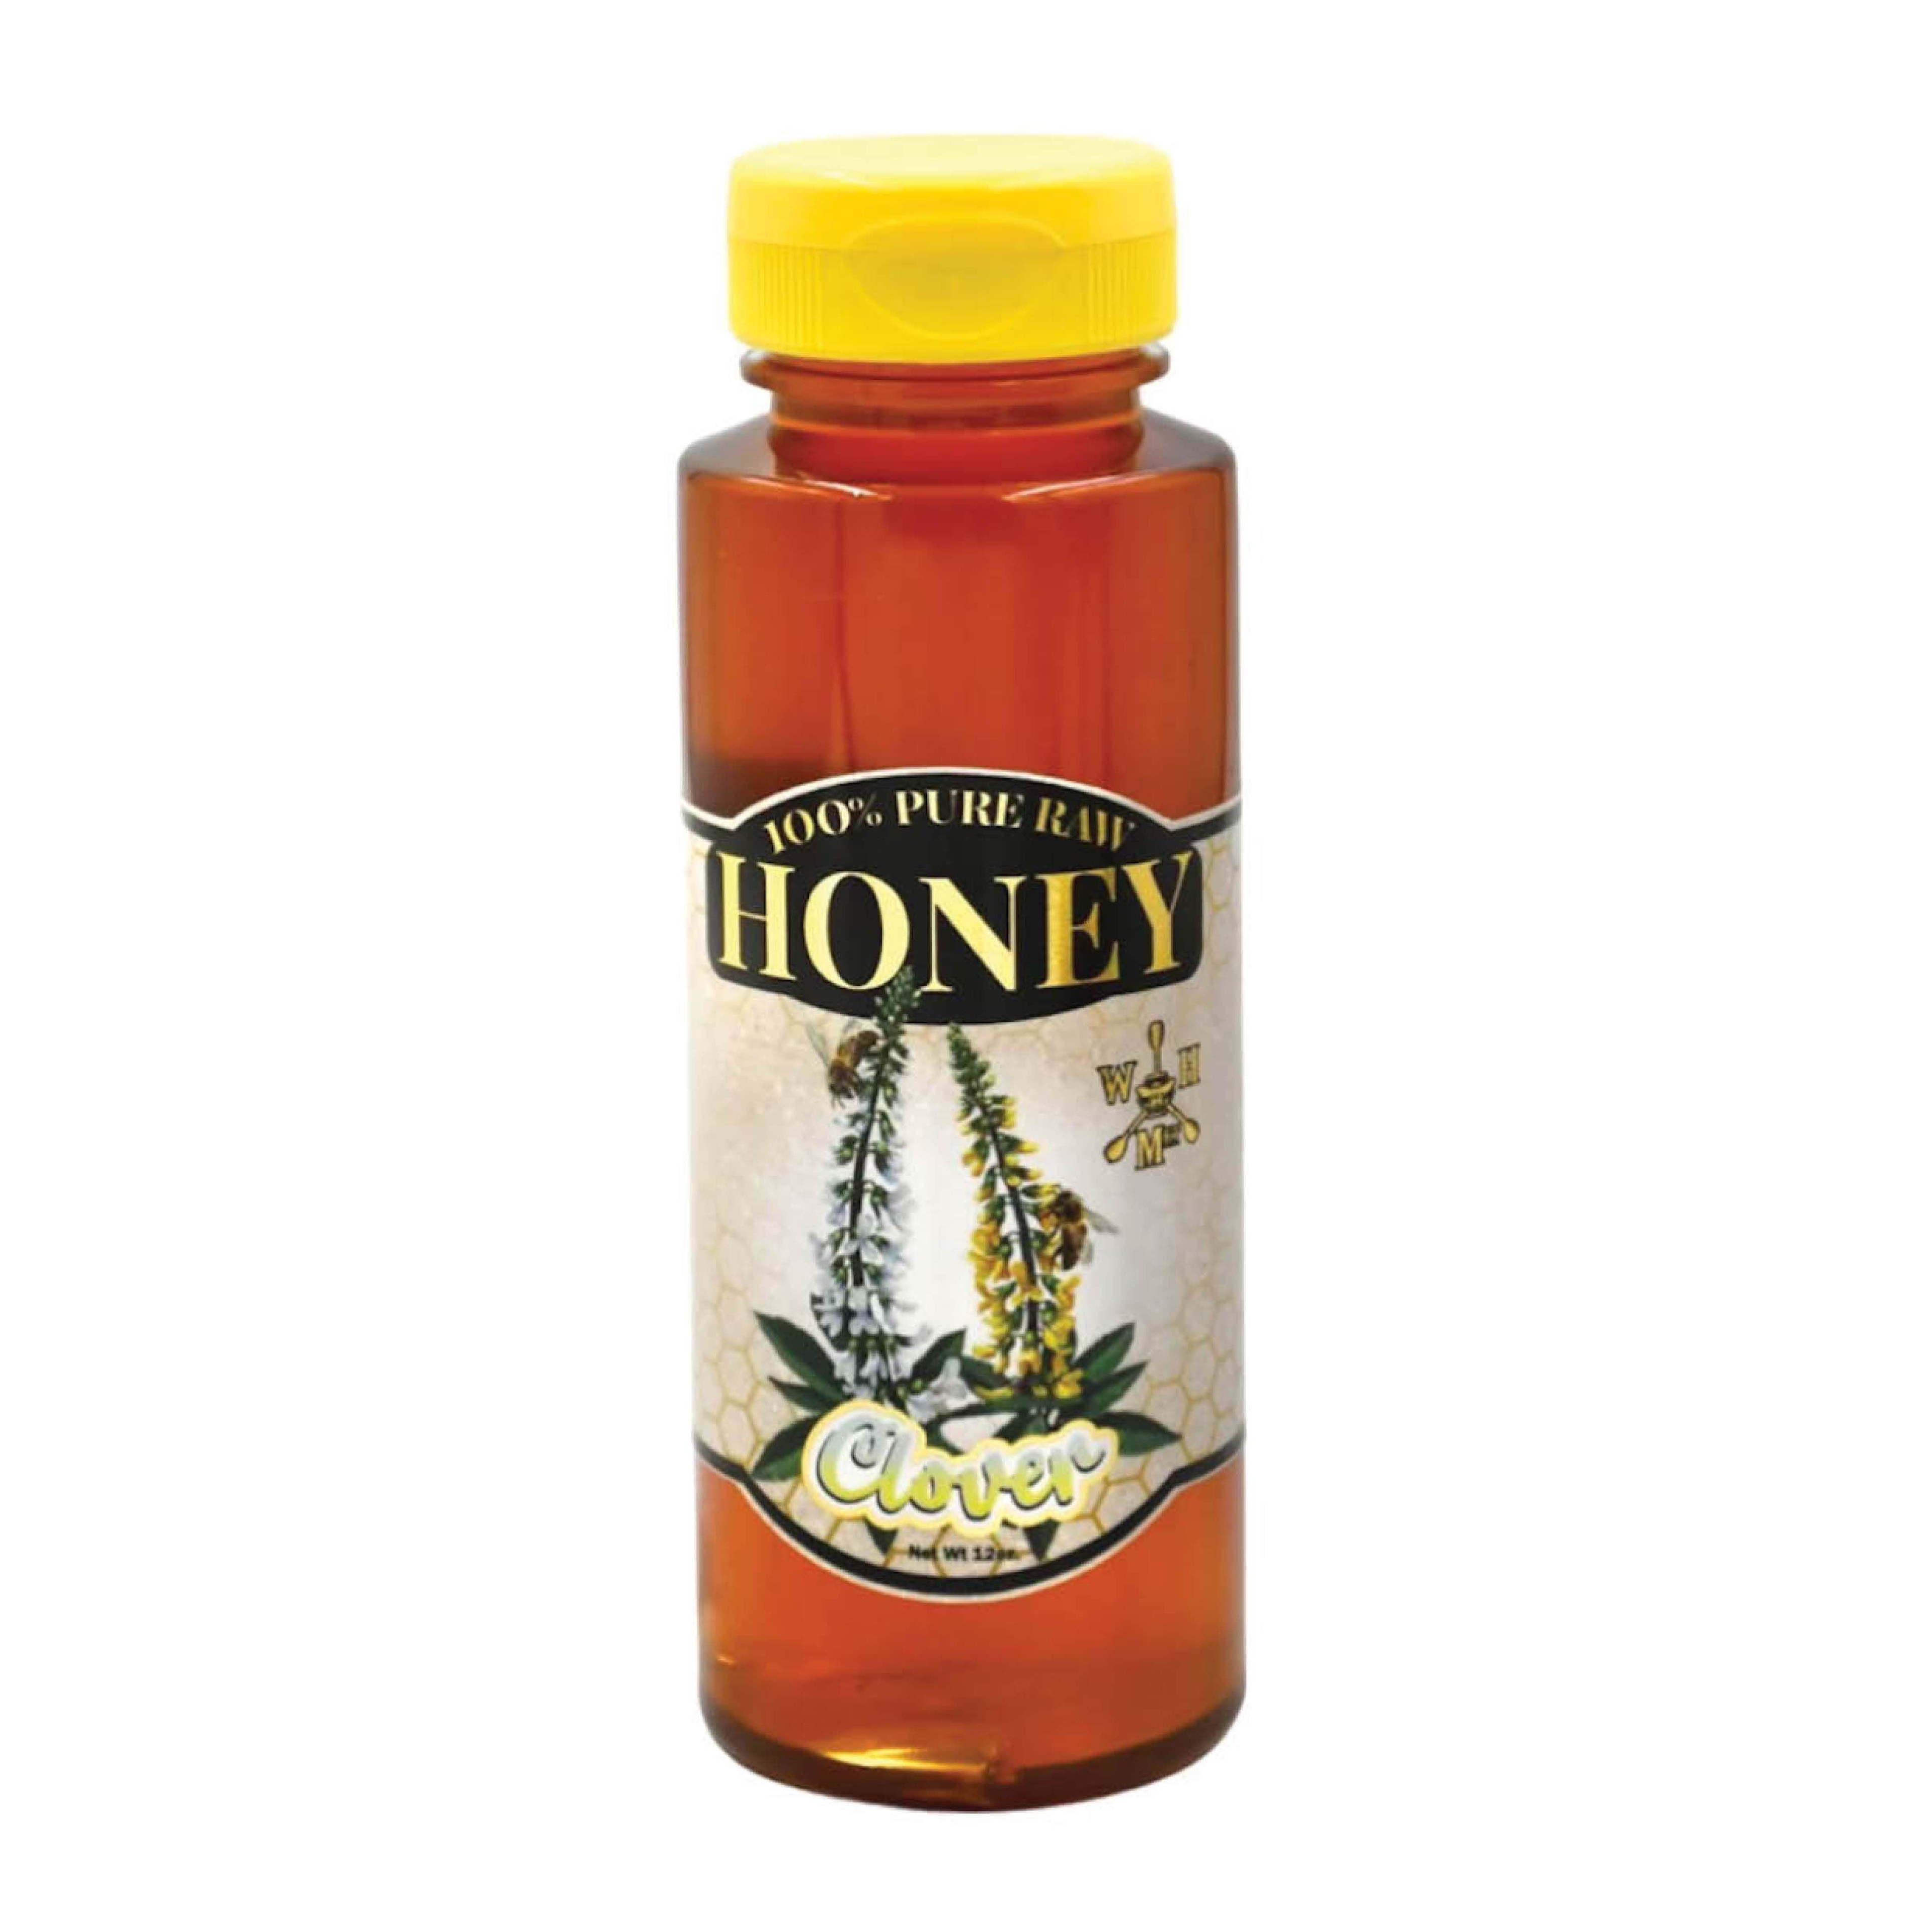 clover honey